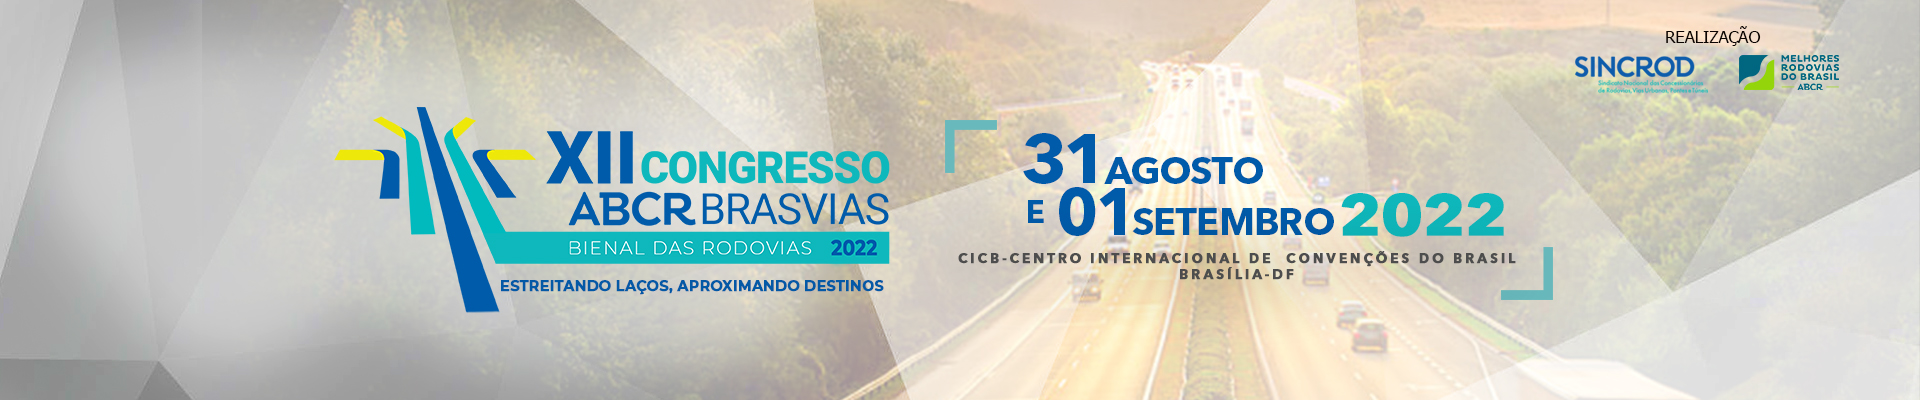 XII Congresso ABCR Brasvias - Bienal das Rodovias 2022